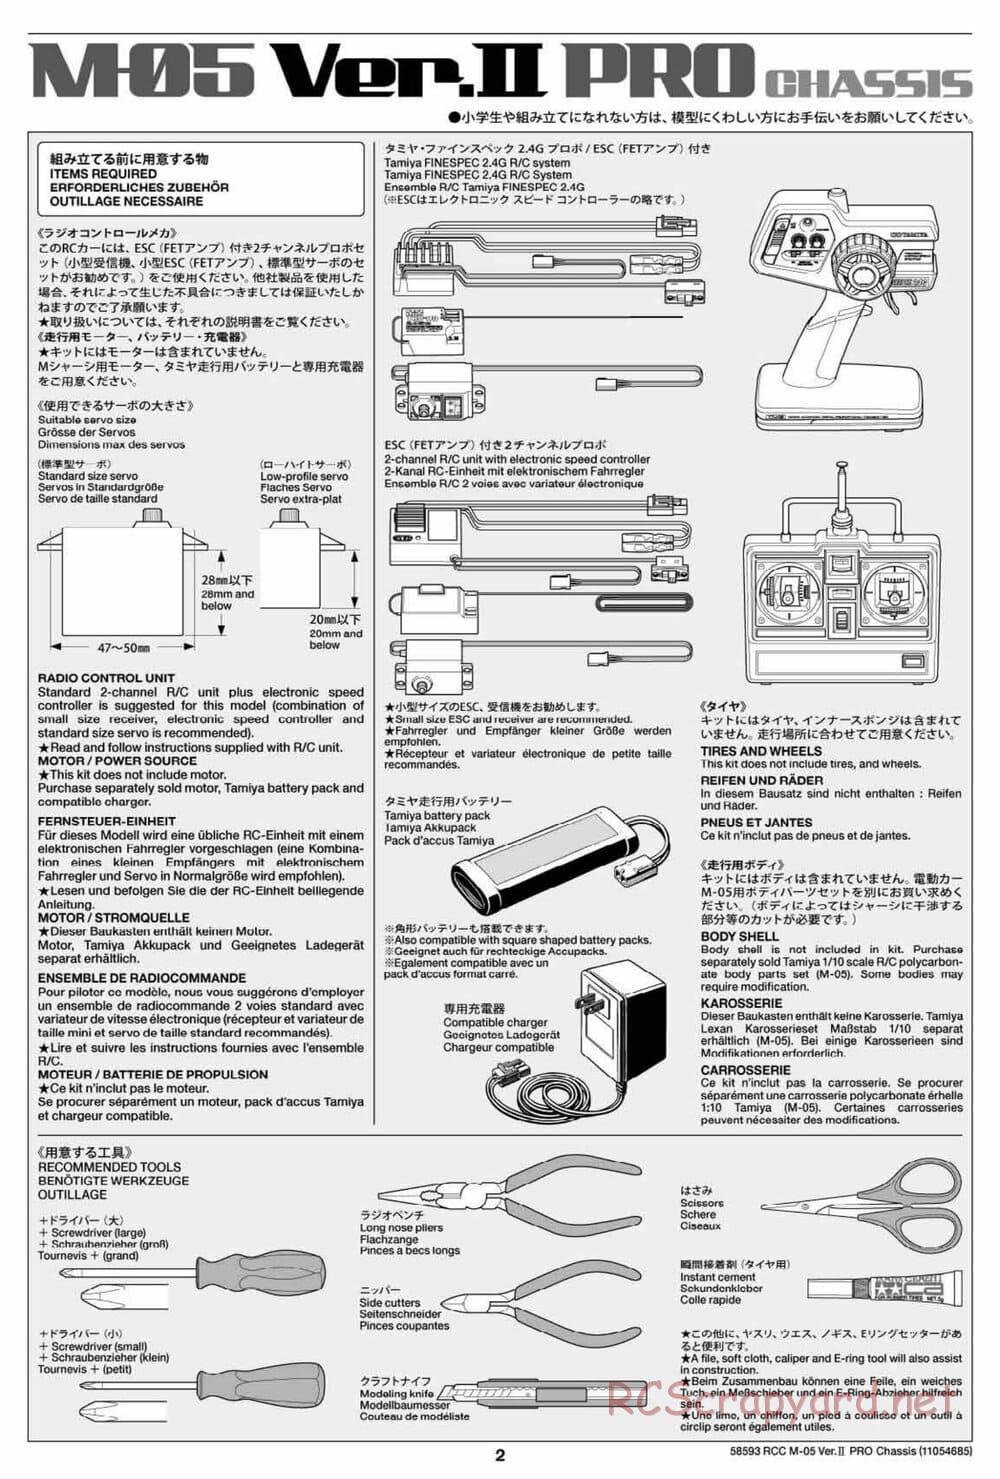 Tamiya - M-05 Ver.II Pro Chassis - Manual - Page 2